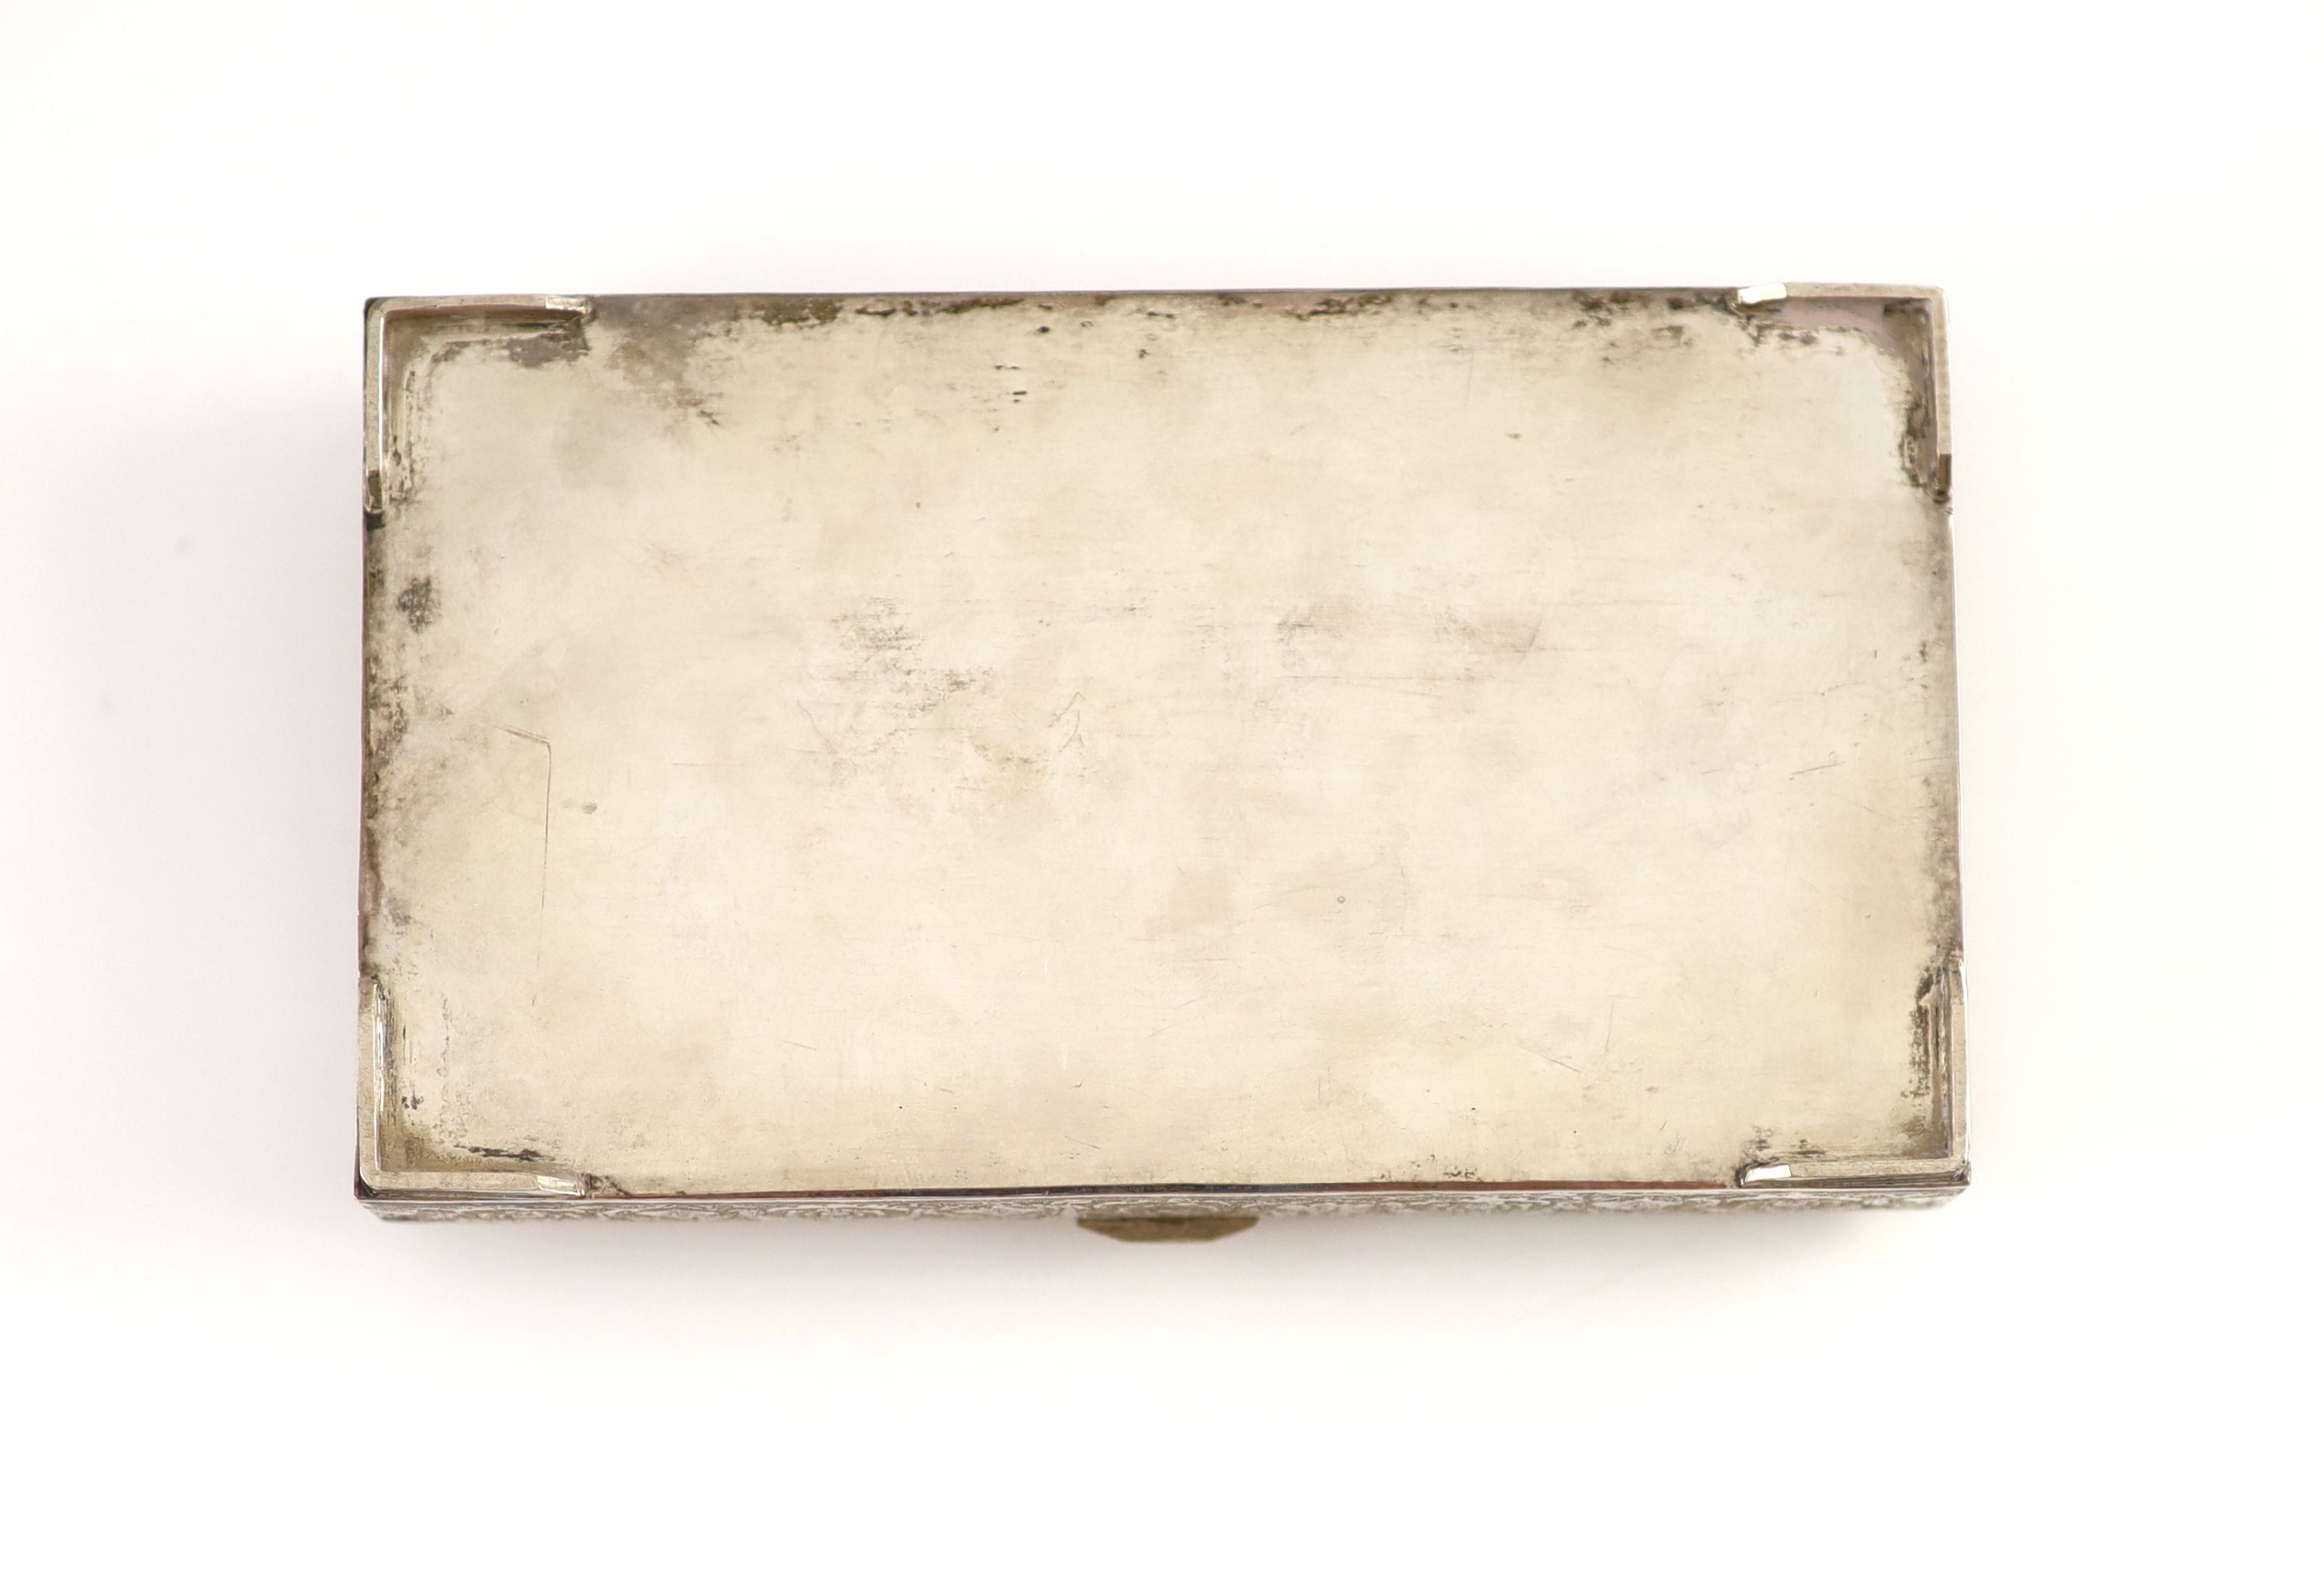 An early 20th century Persian rectangular silver box 14 x 8 x 2cm